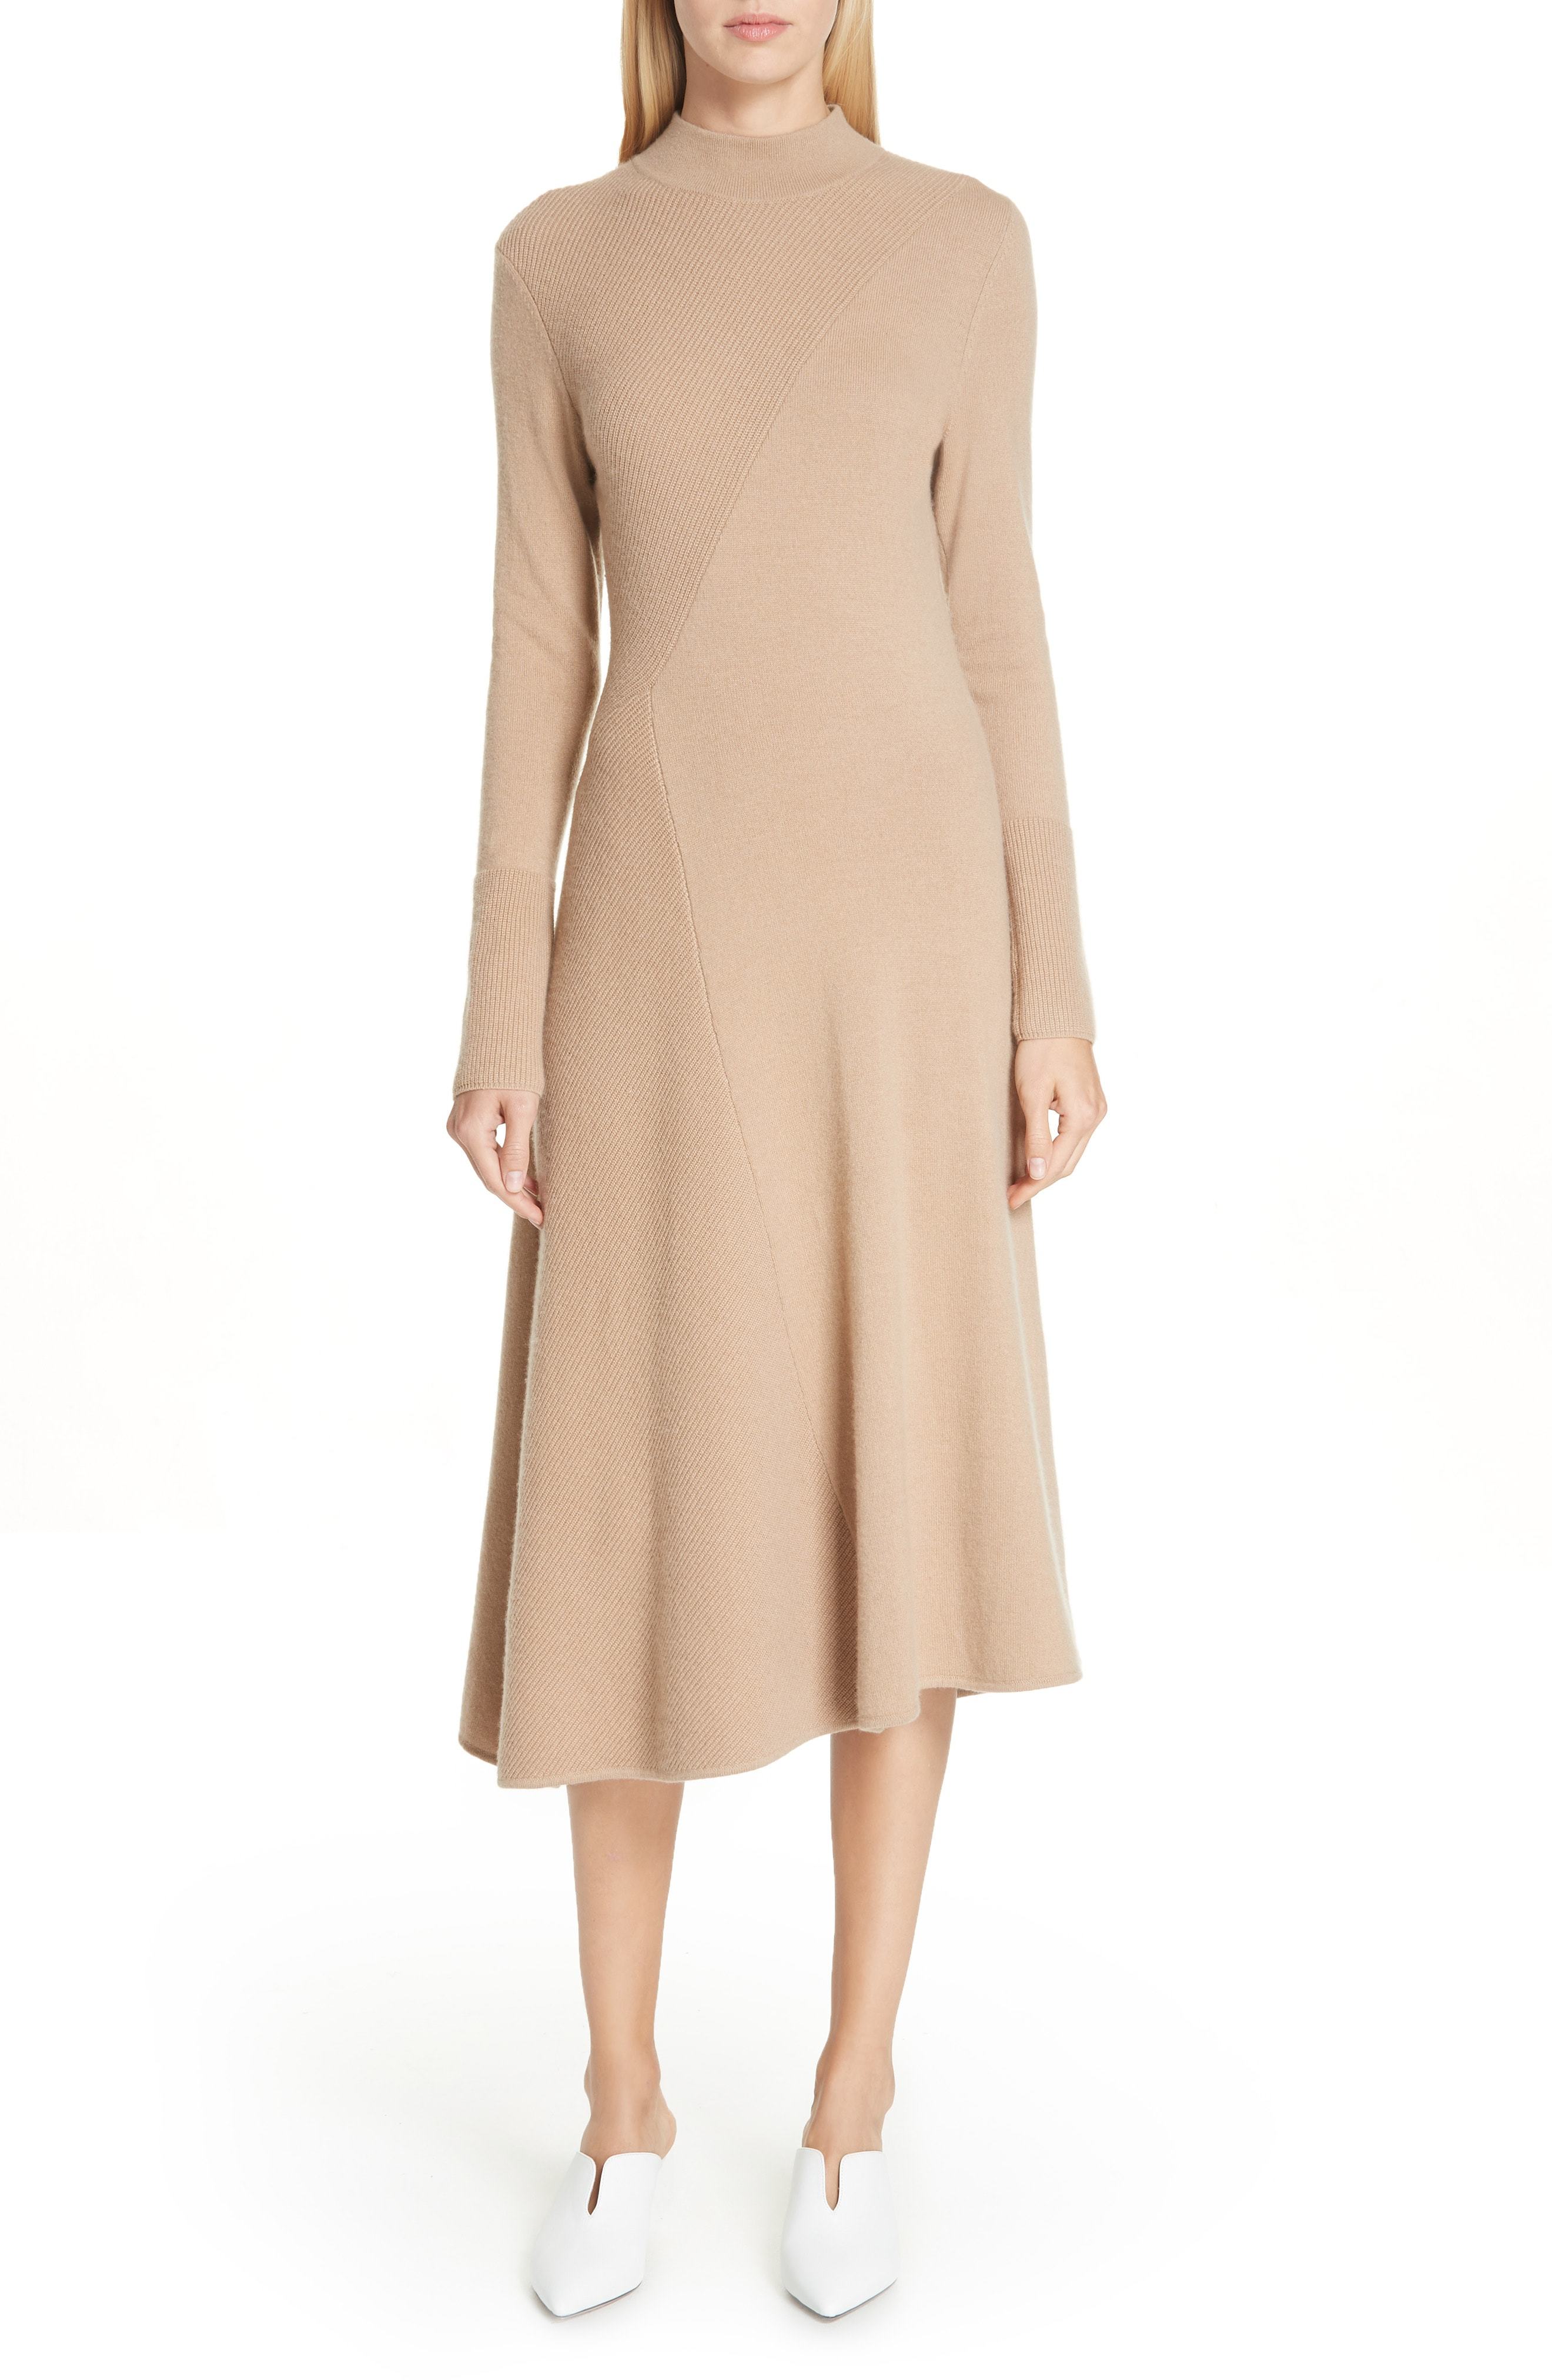 Lewit Cashmere Blend Sweater Dress, $399 | Nordstrom | Lookastic